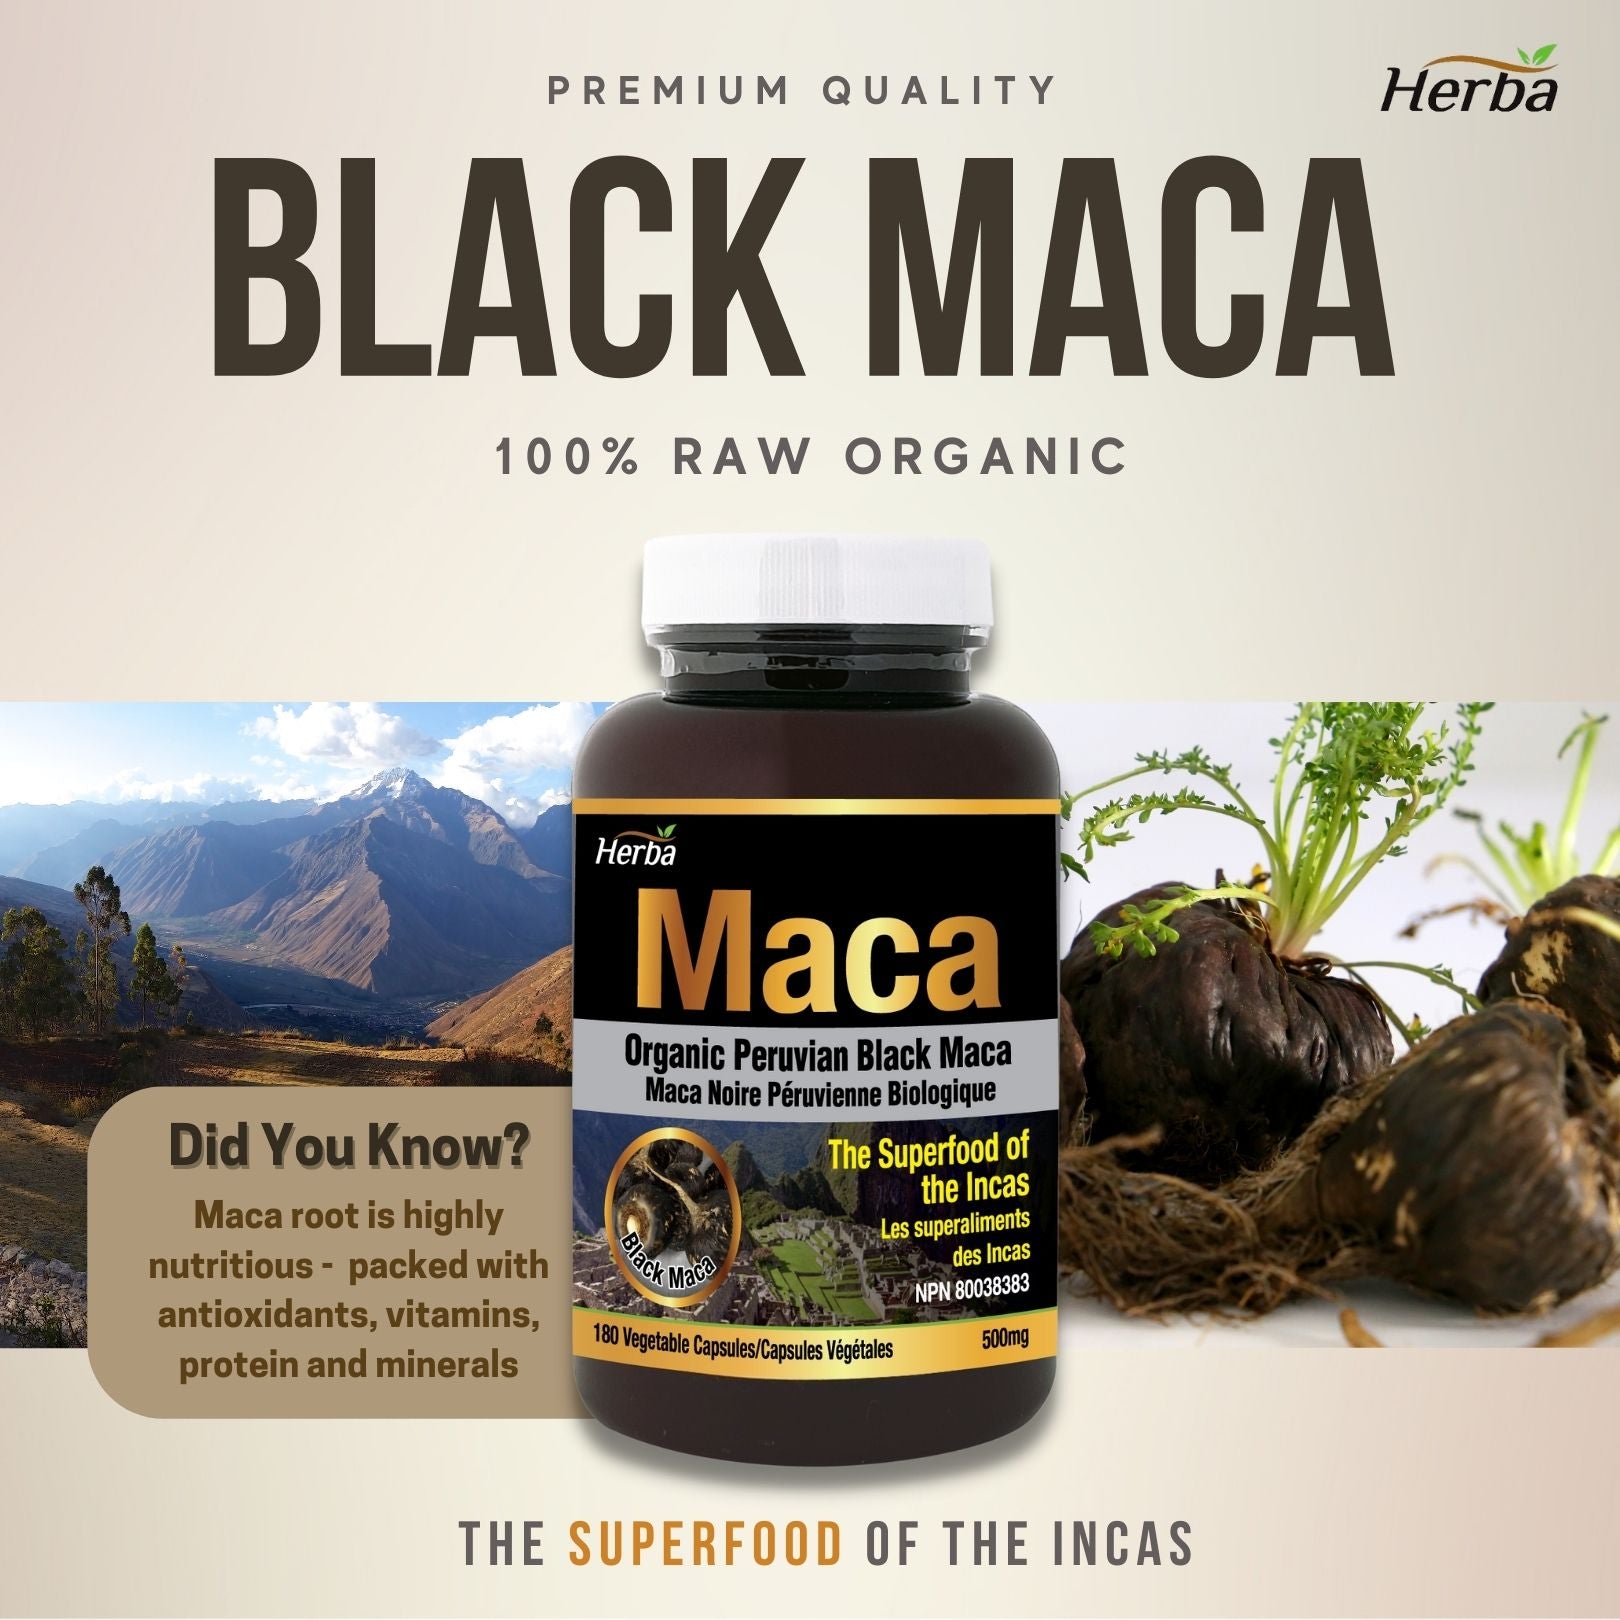 Herba Organic Black Maca Capsules - 500mg, 180 Capsules | Peruvian Black Maca